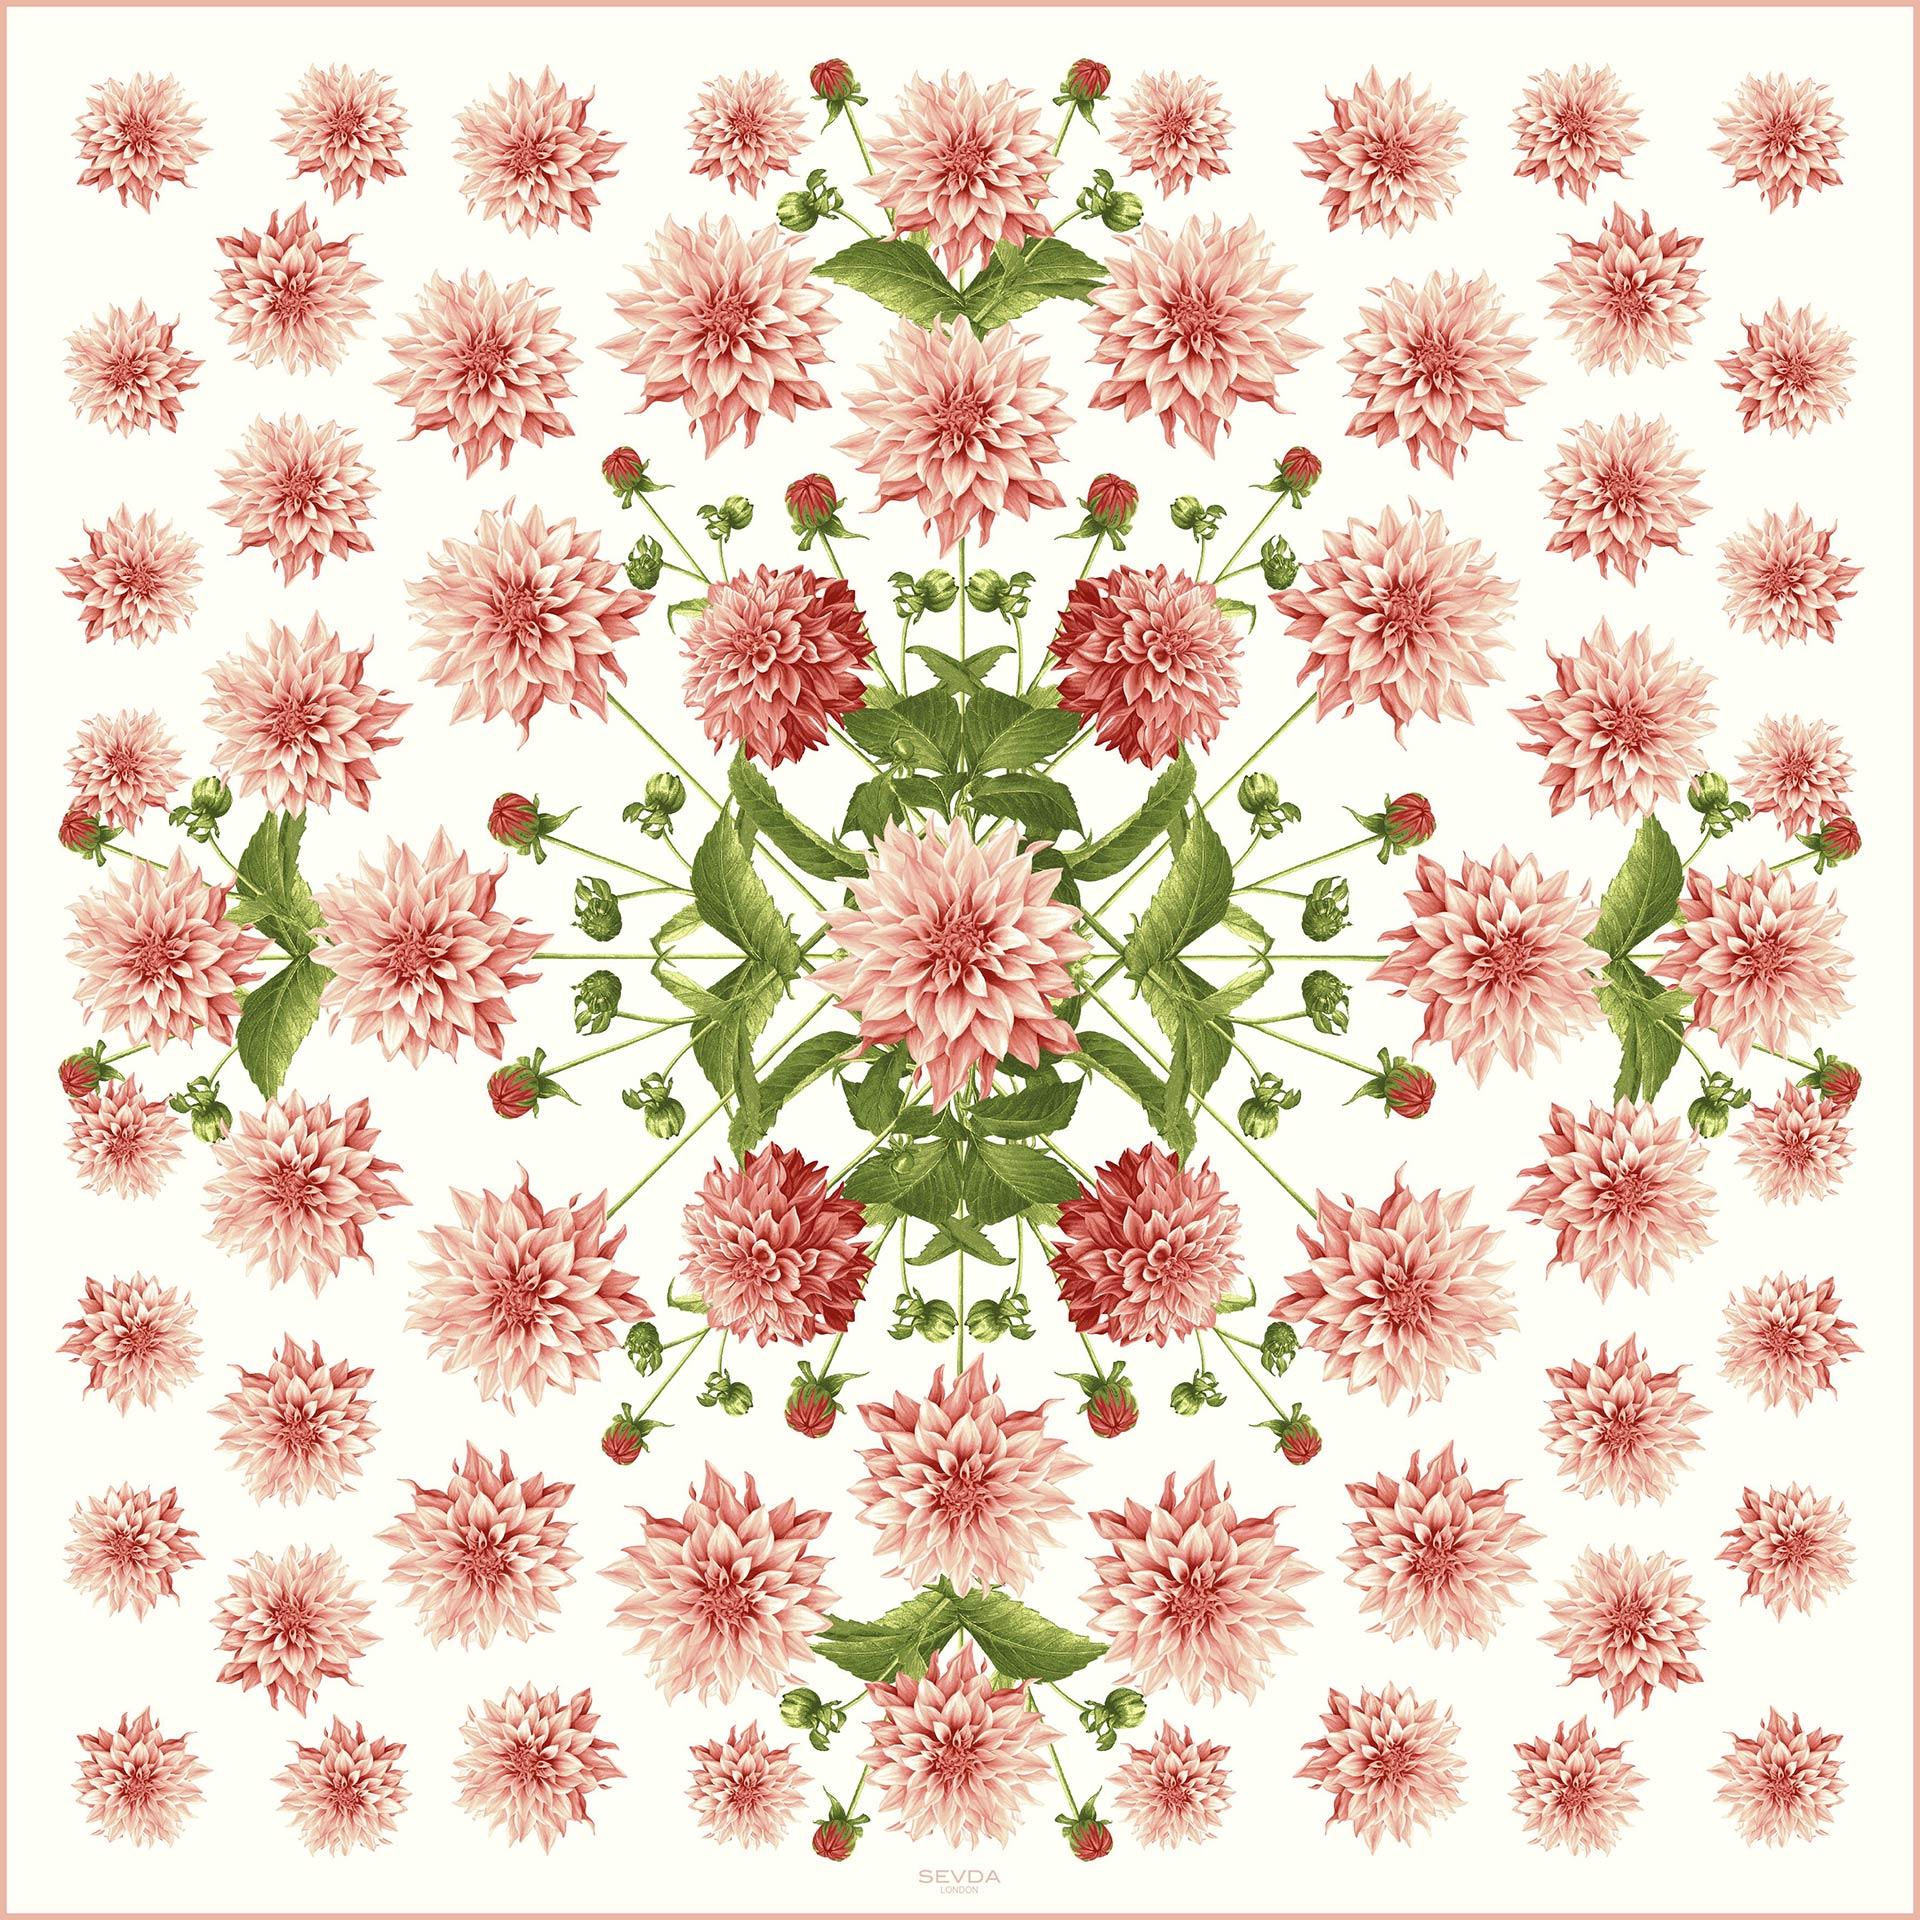 Coral Pink Dahlia Garden Silk Scarf - Harmonising London's design with Italian craftsmanship, a splendid gift choice.